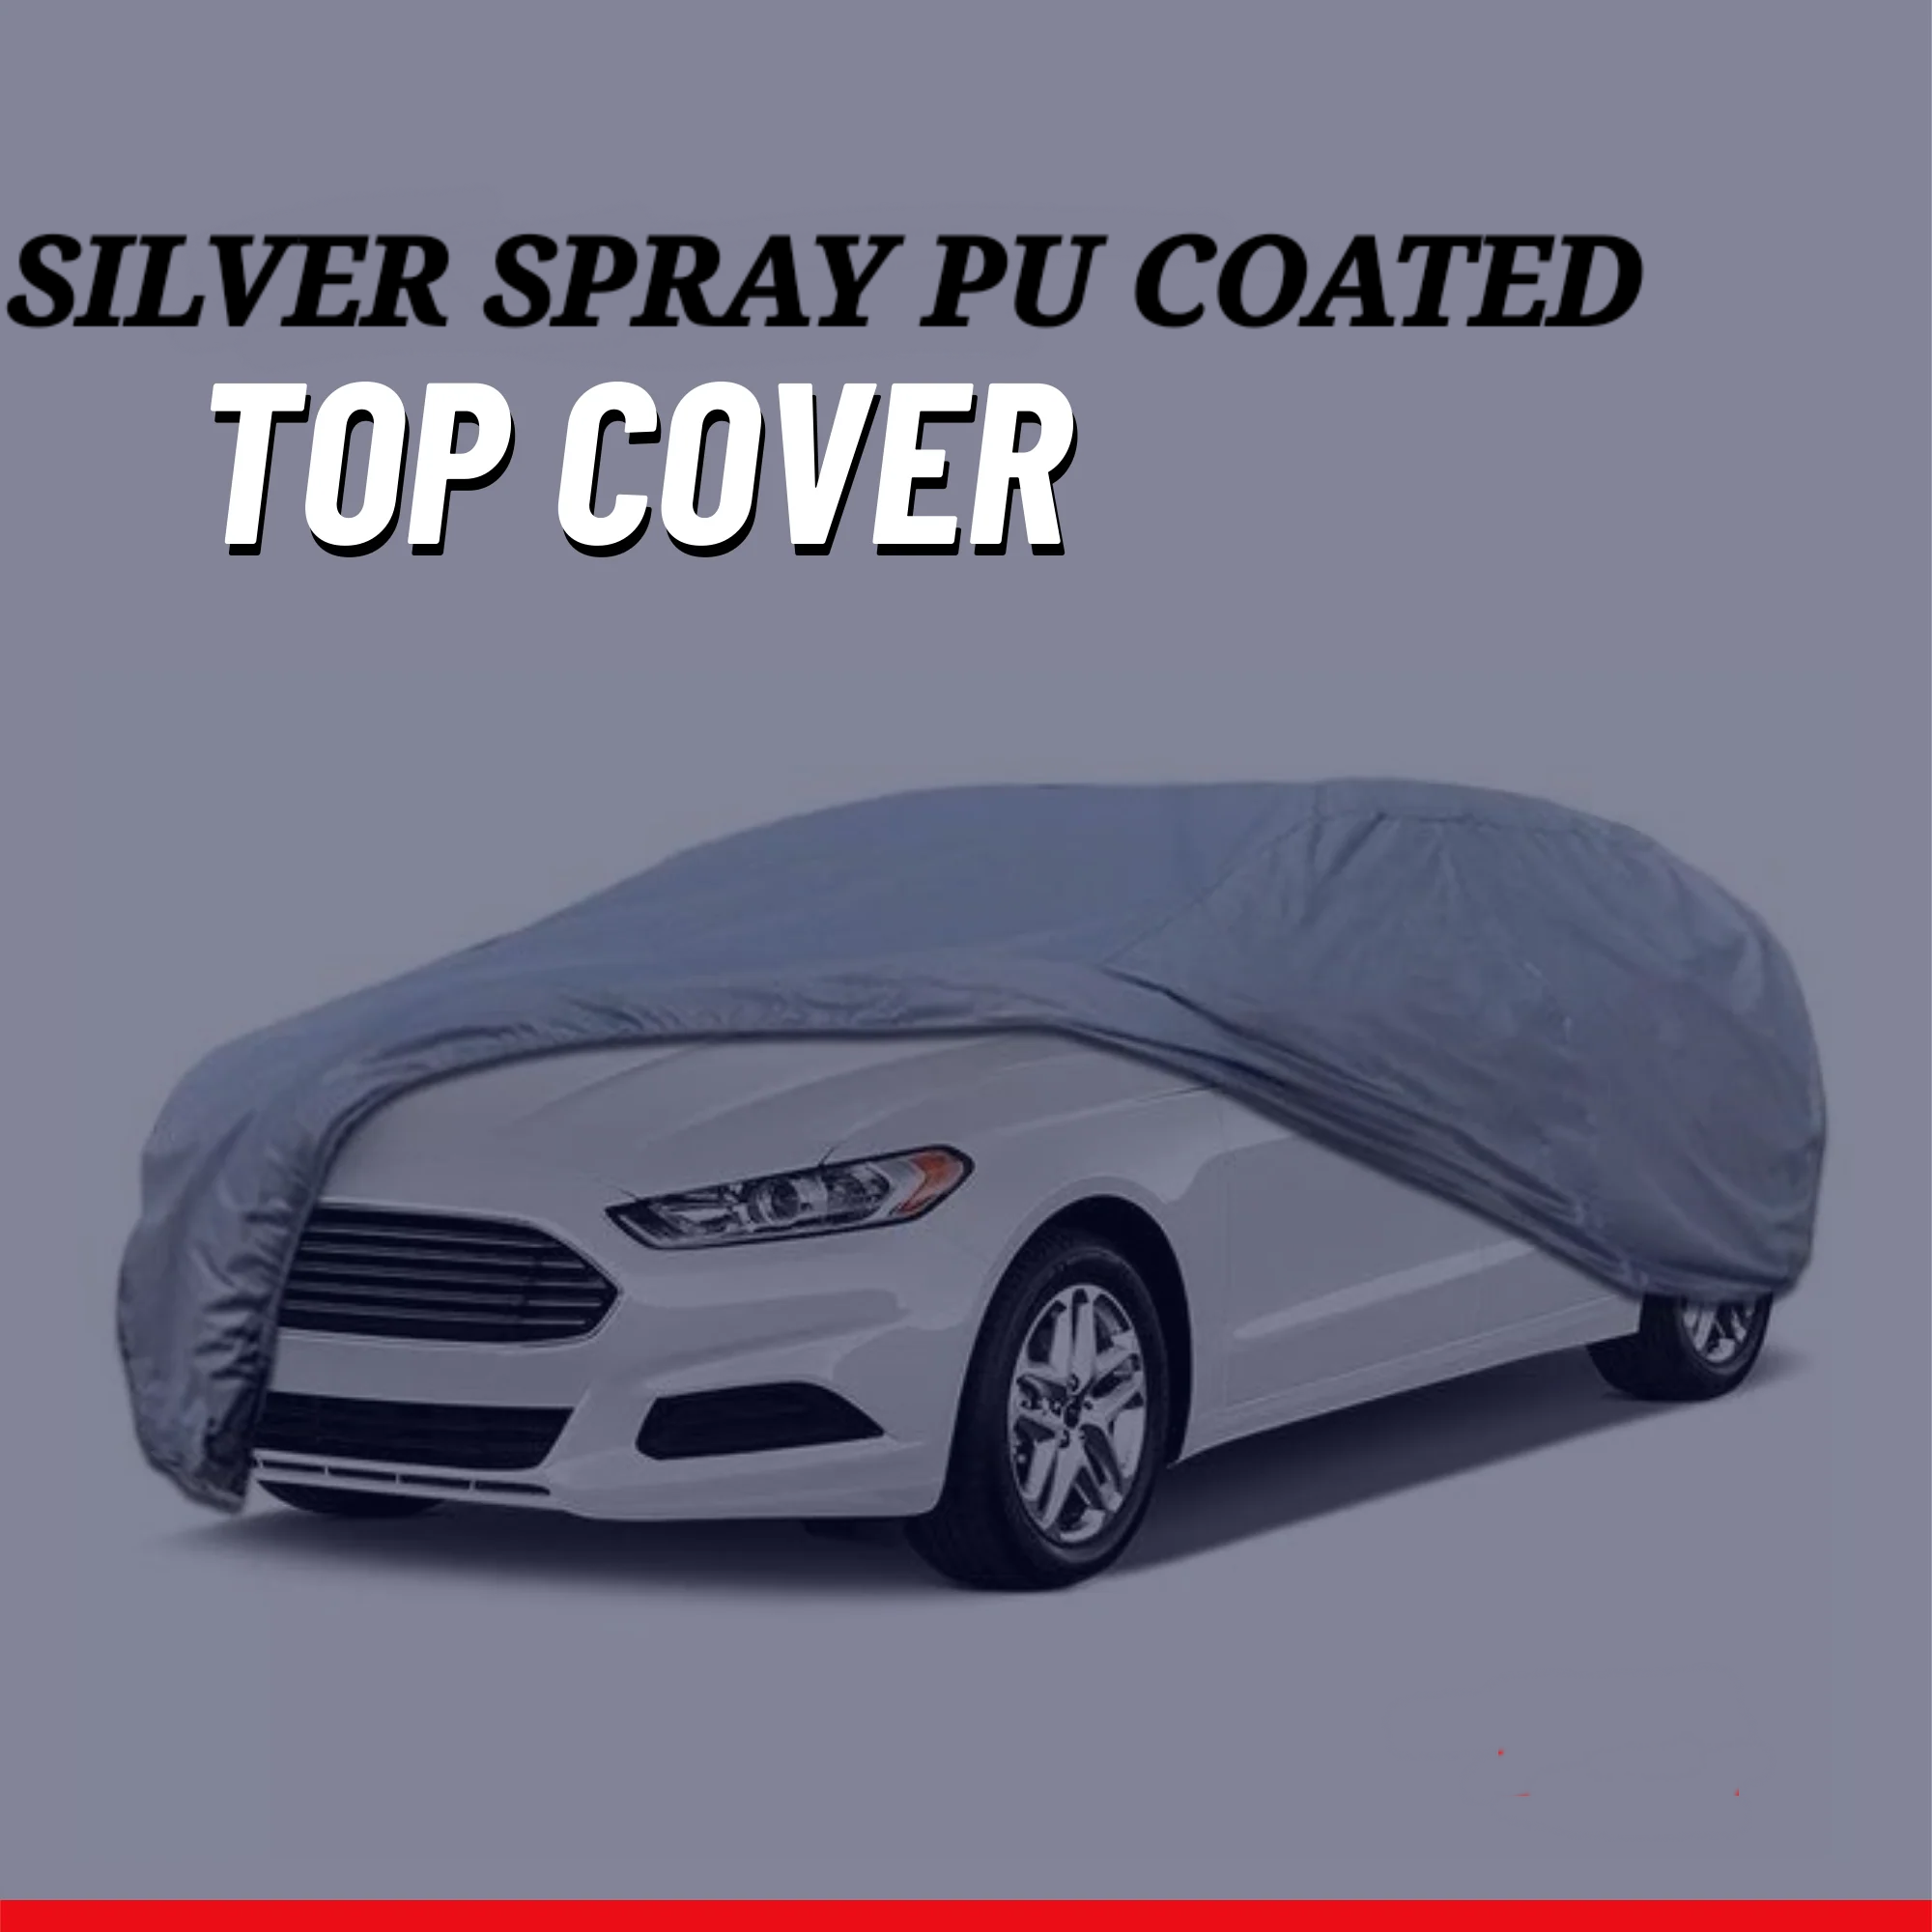 FAW XPV 2013-2023 Car Top Cover - Waterproof & Dustproof Silver Spray Coated + Free Bag